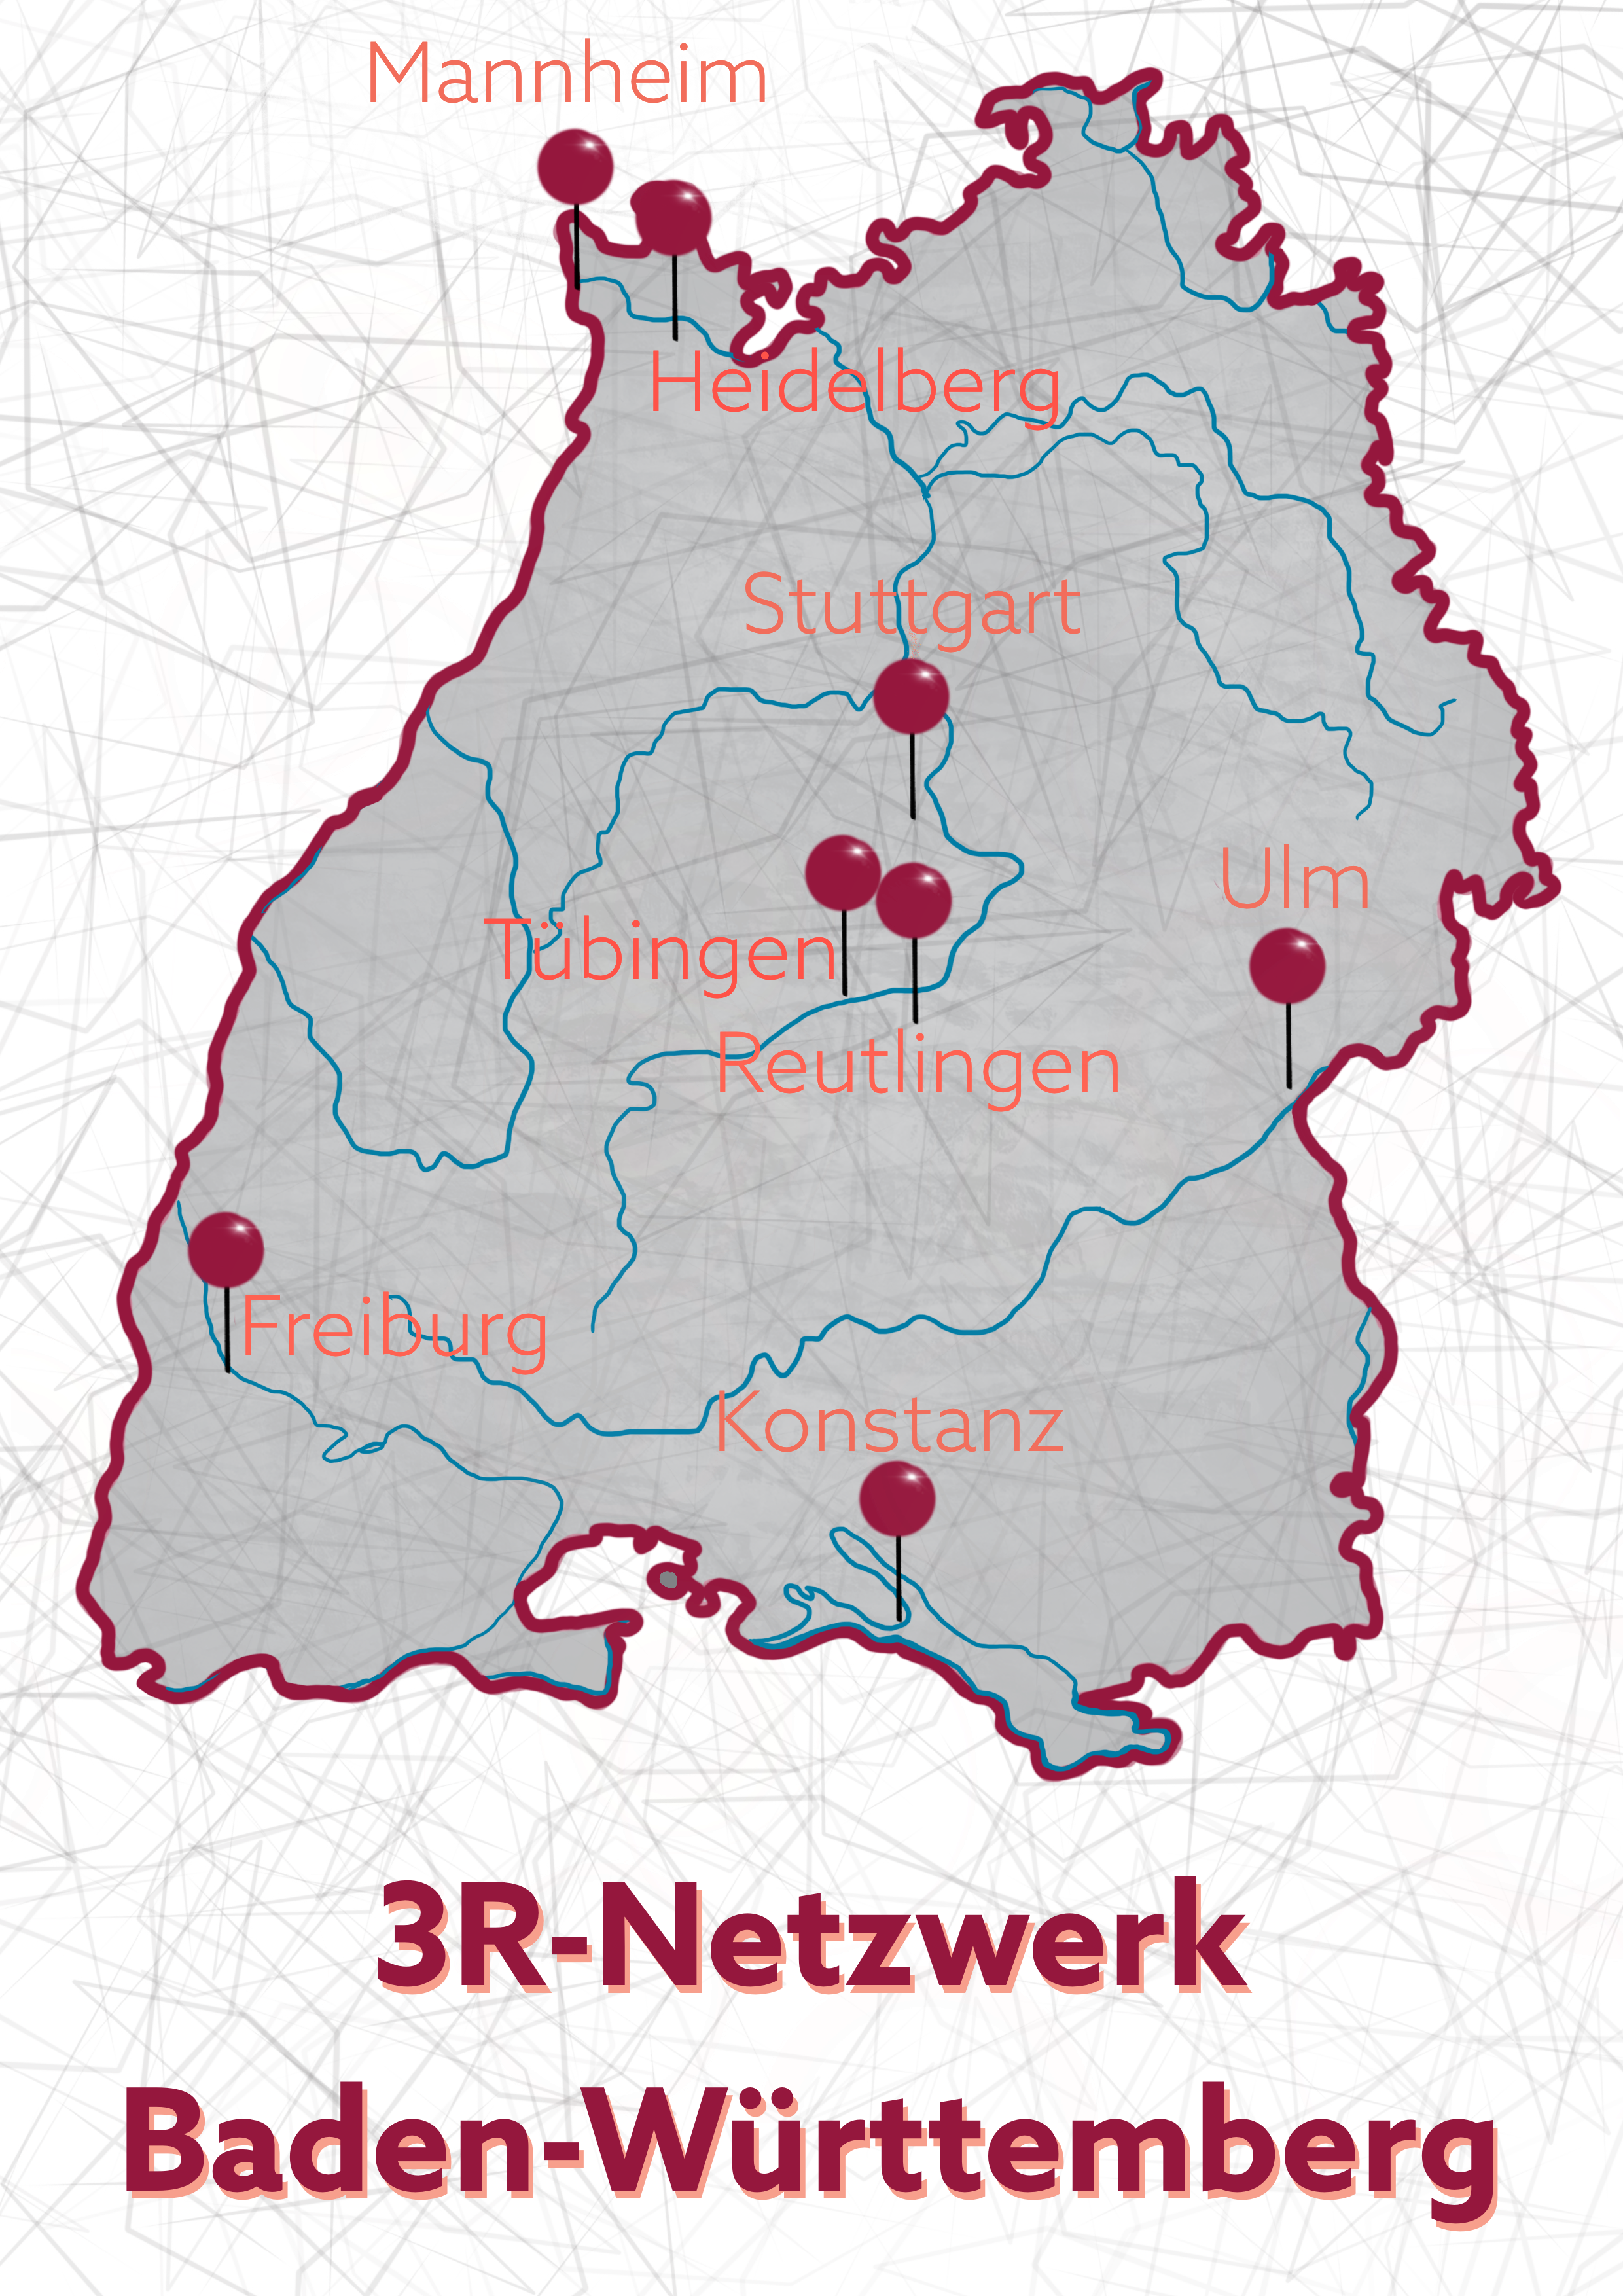 Map showing the eight locations of the 3R-Netzwerk Baden-Württemberg: Mannheim, Heidelberg, Stuttgart, Reutlingen, Ulm, Freiburg and Konstanz.